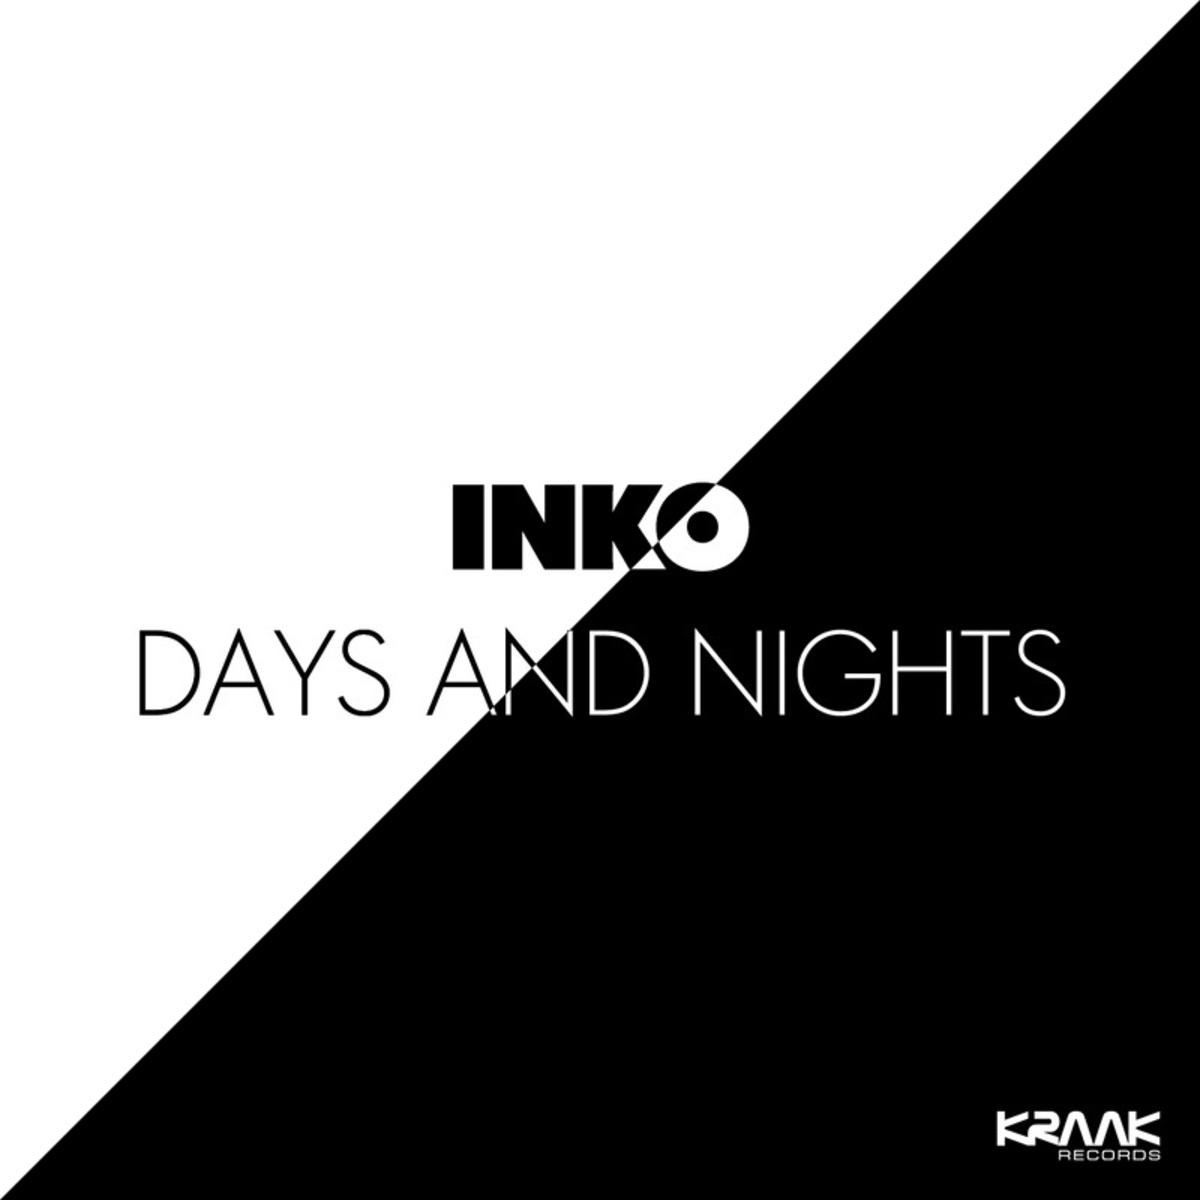 Inko - Days and Nights / Kraak Records